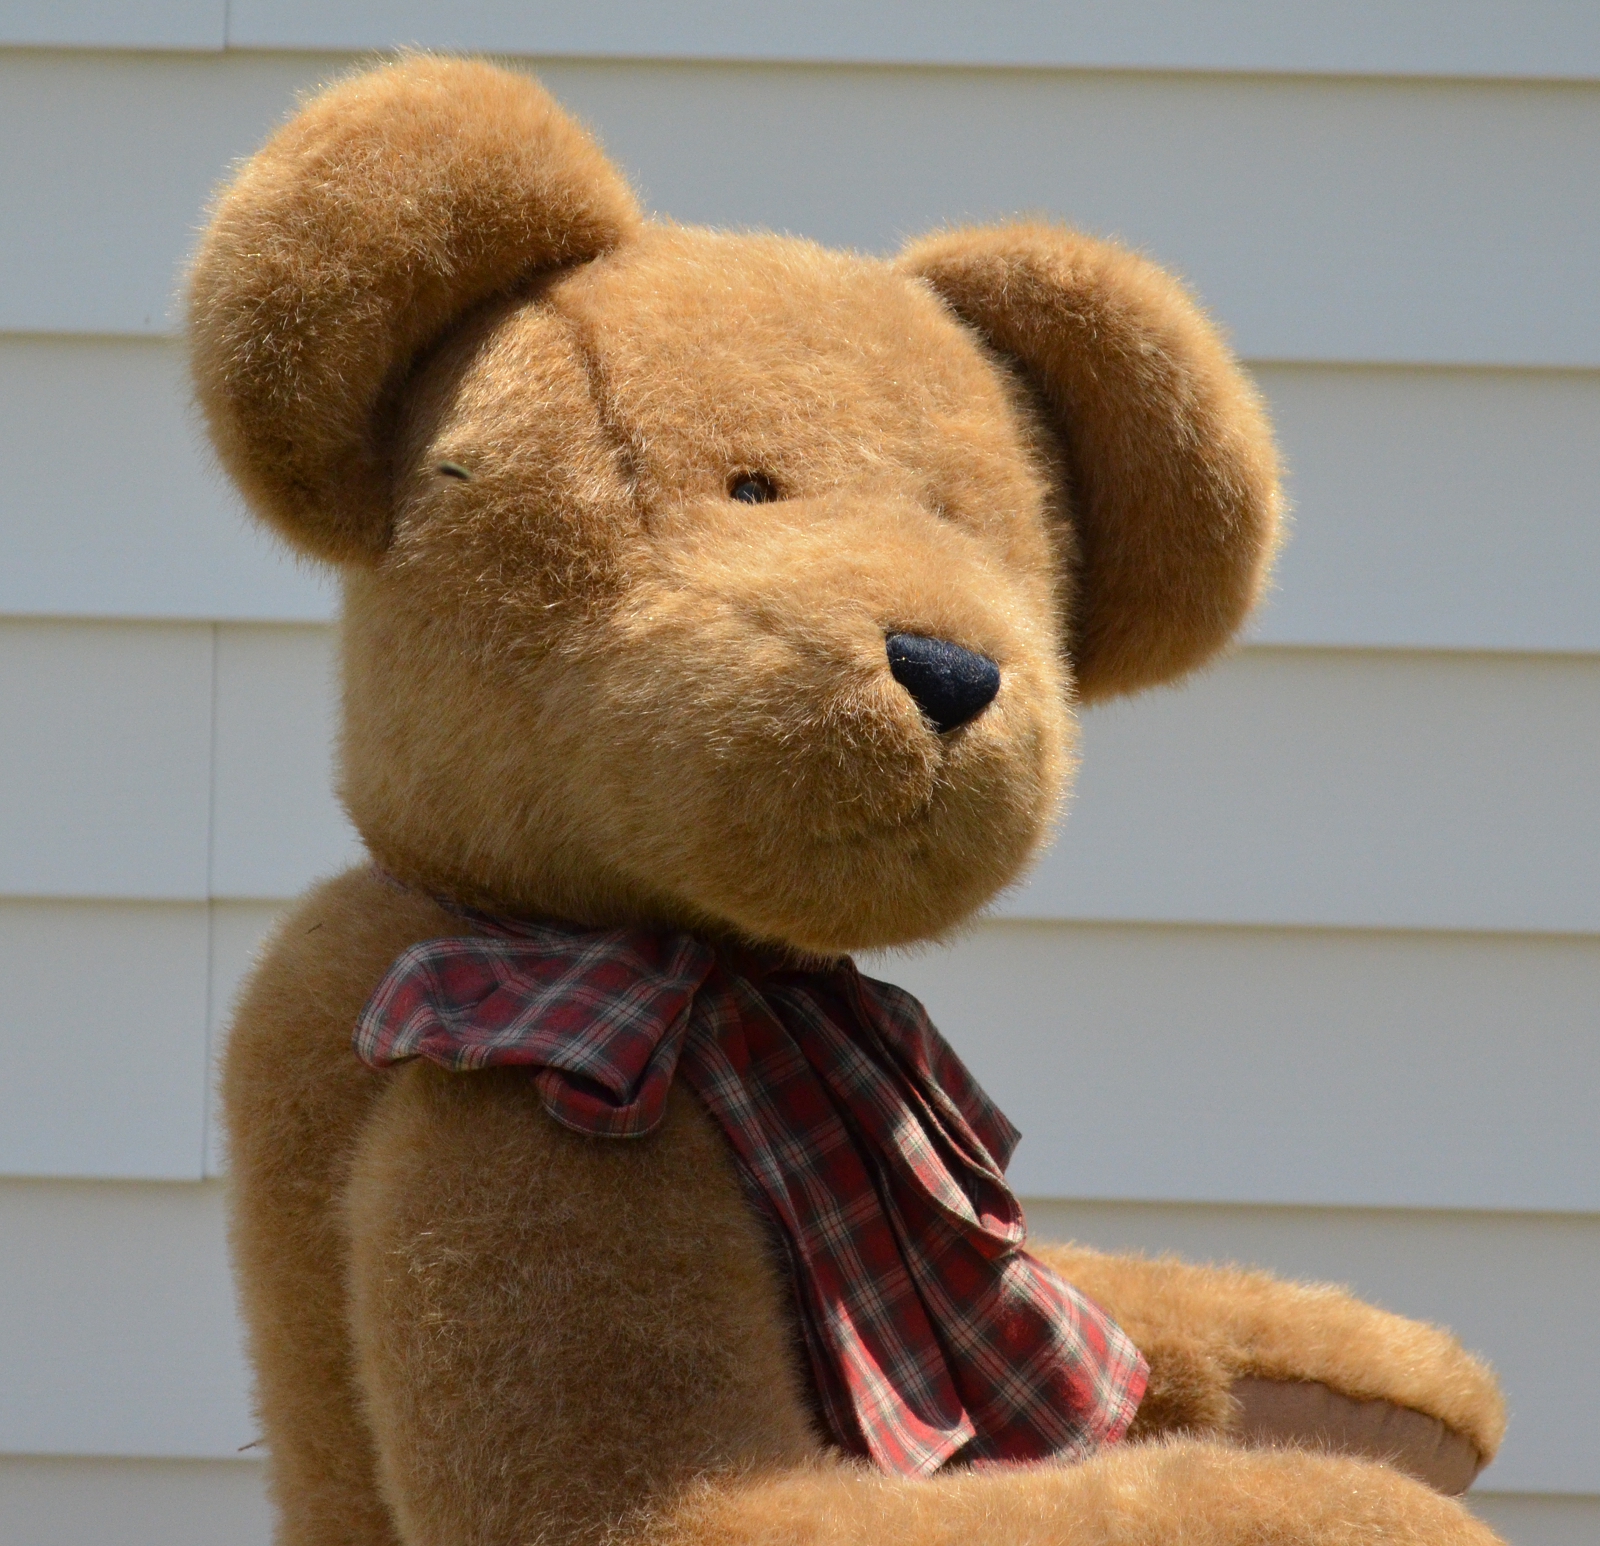 Steiff Bears For Sale, Nana's Teddies & Toys